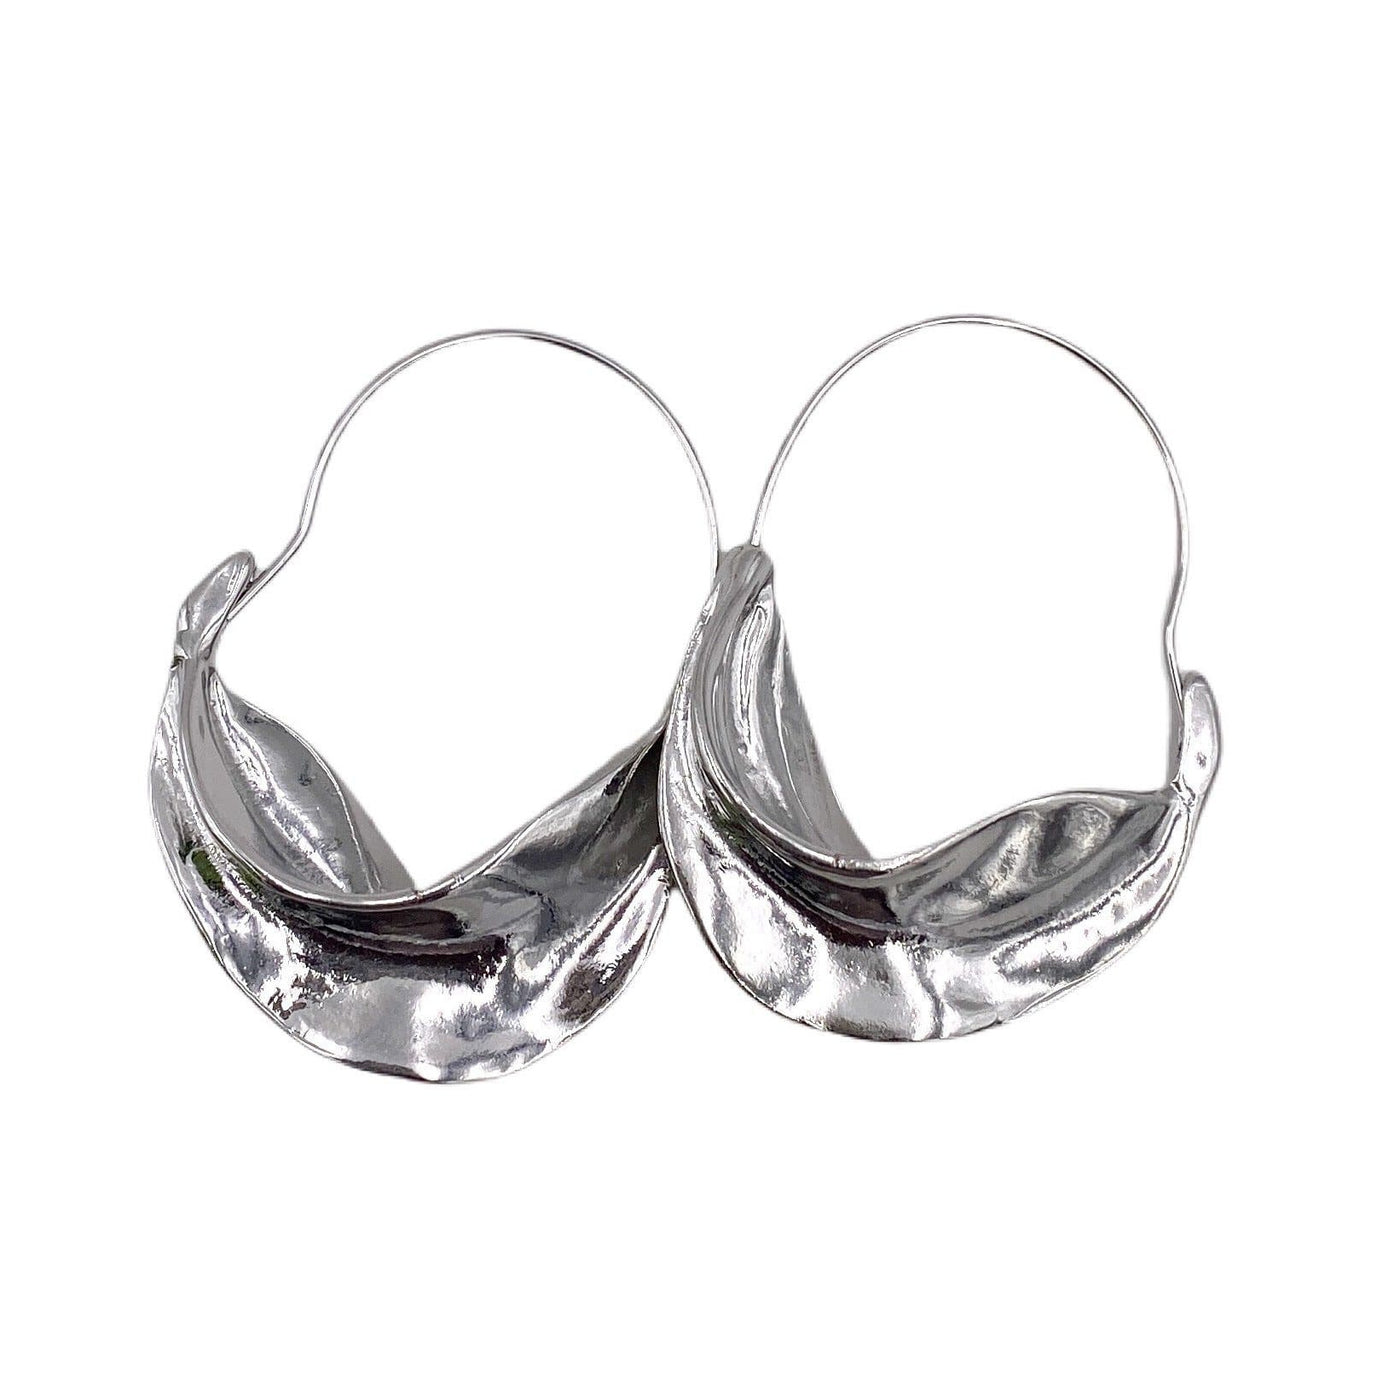 Dekyemso Earrings - Spend $50 on earrings and get 1 of these for free - Trufacebygrace